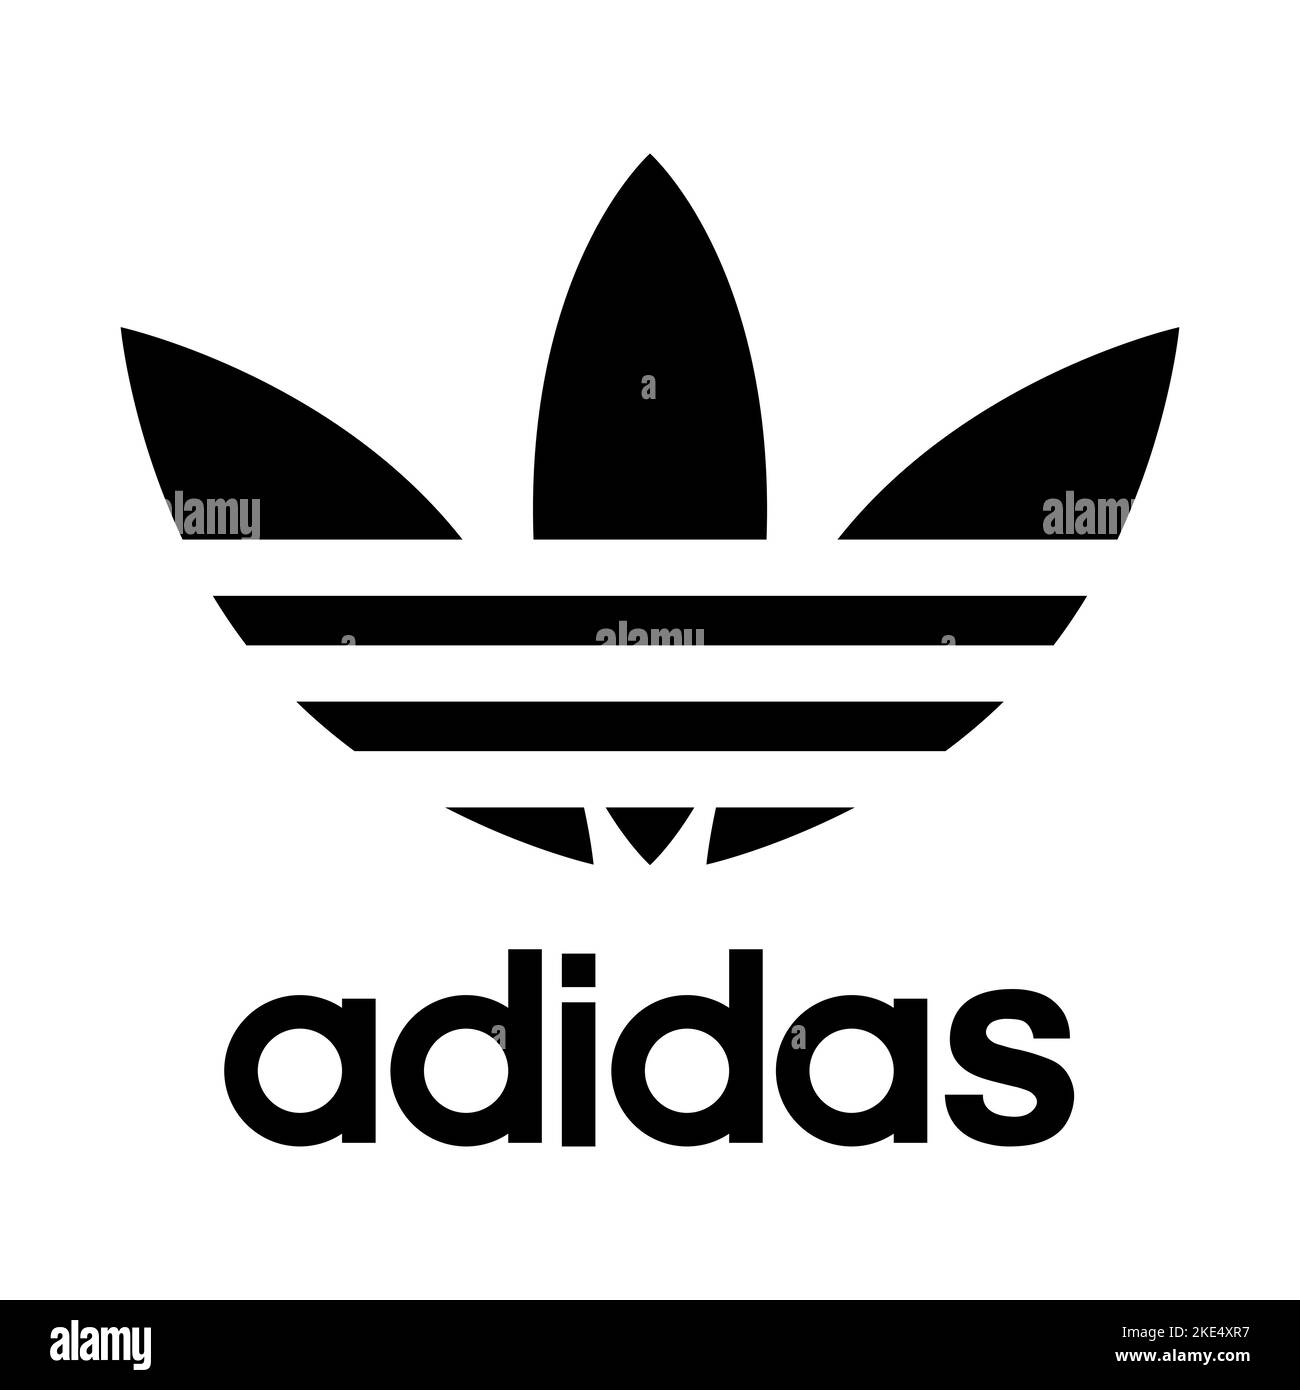 Adidas logo icon Banque d'images vectorielles - Alamy